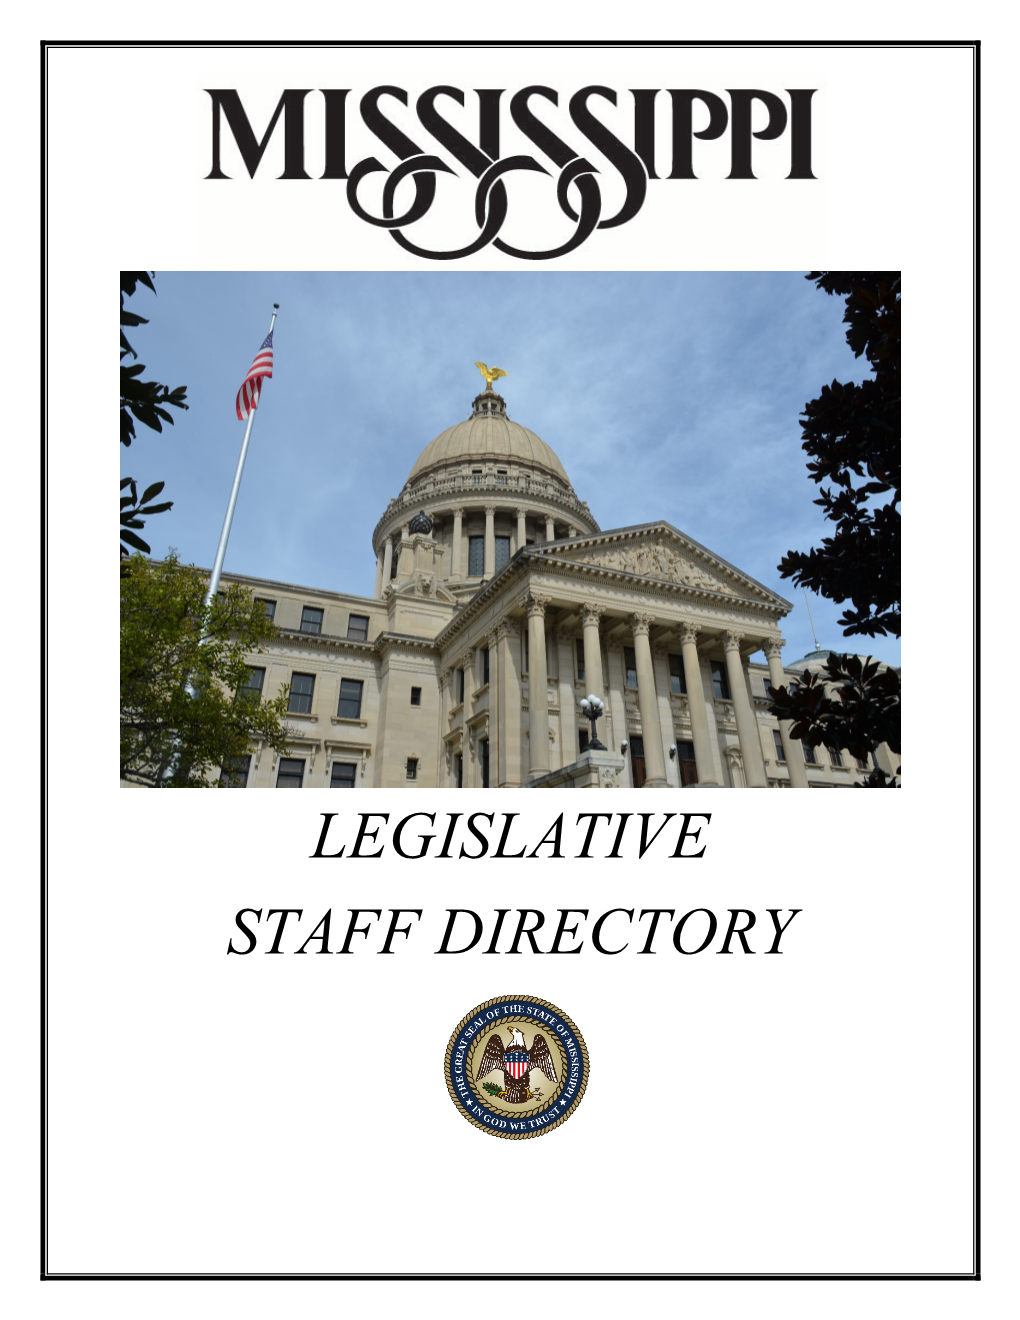 Legislative Staff Directory